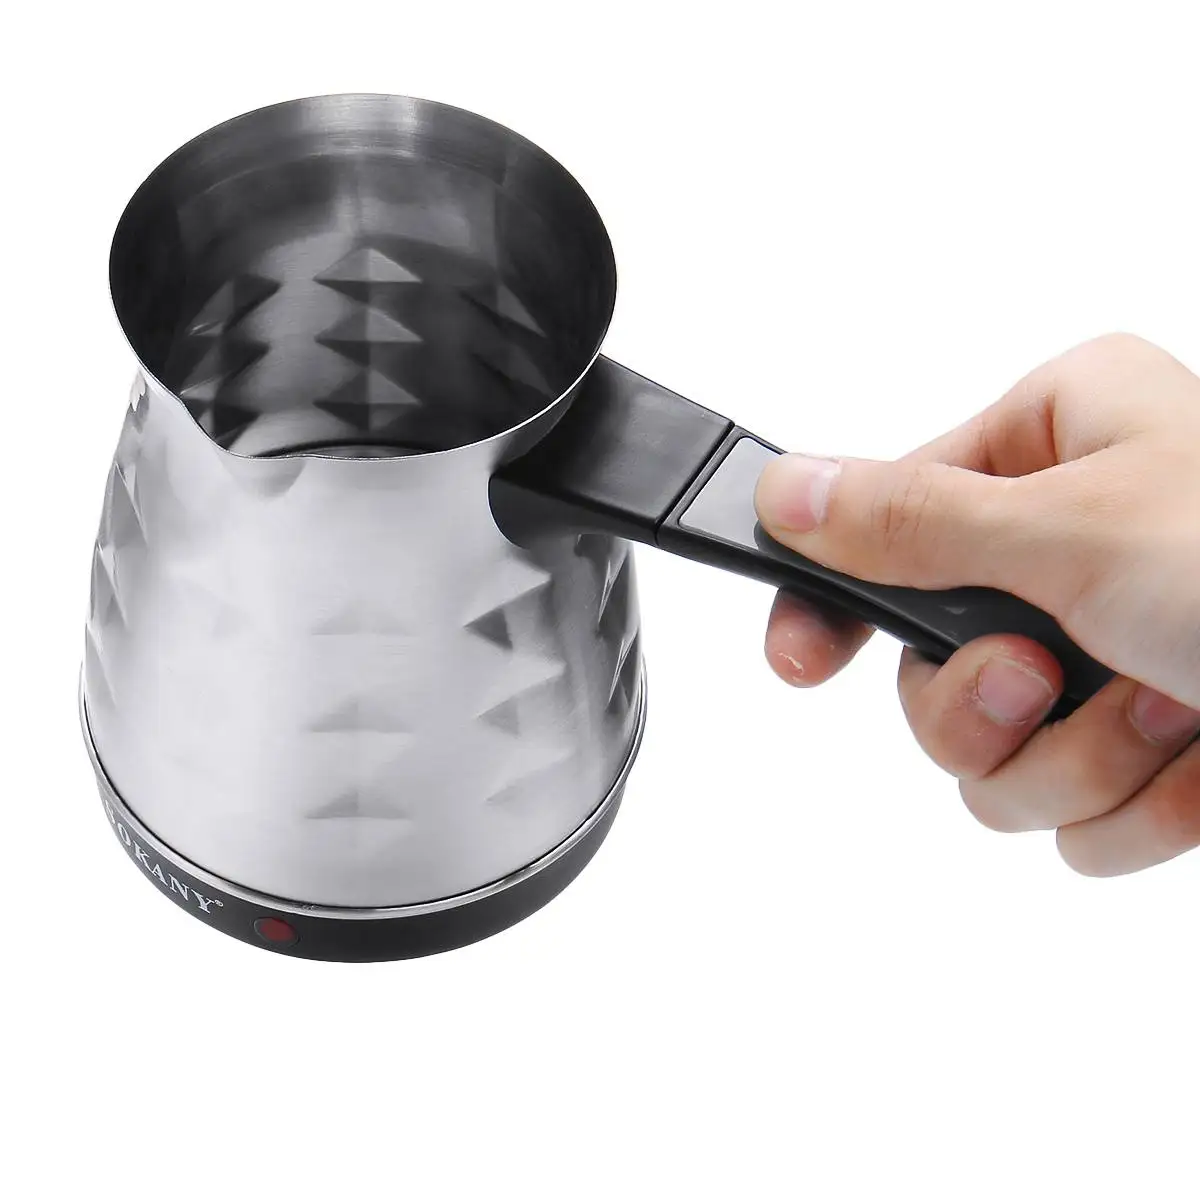 Turkish coffee pot Electric Maker Quick Heat Tea/Milk Making Machine Household Office plastic Italian espresso moka pot 600W